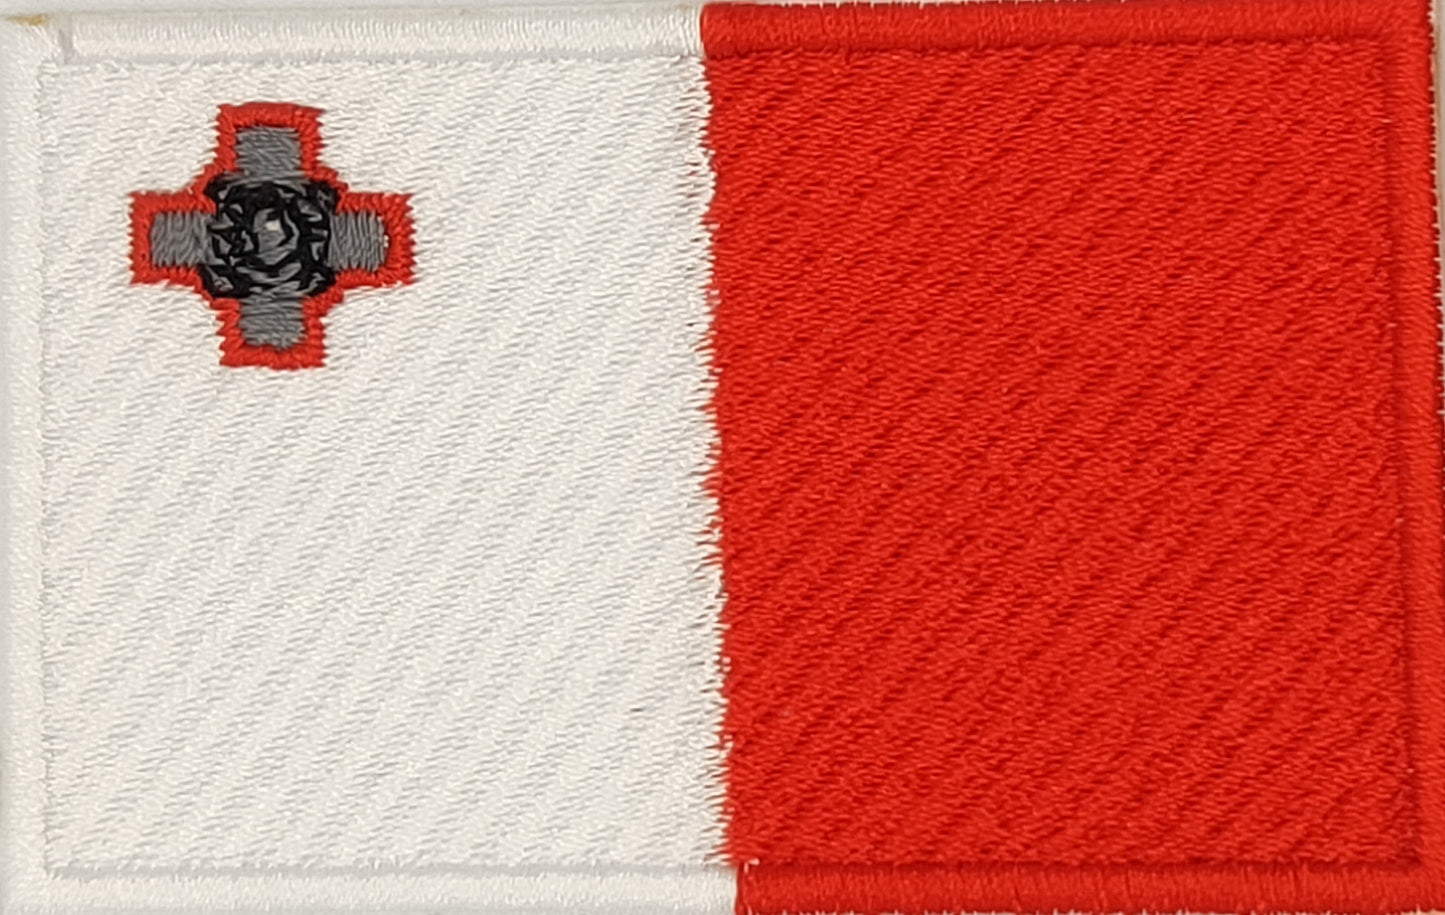 Malta Flag Patch